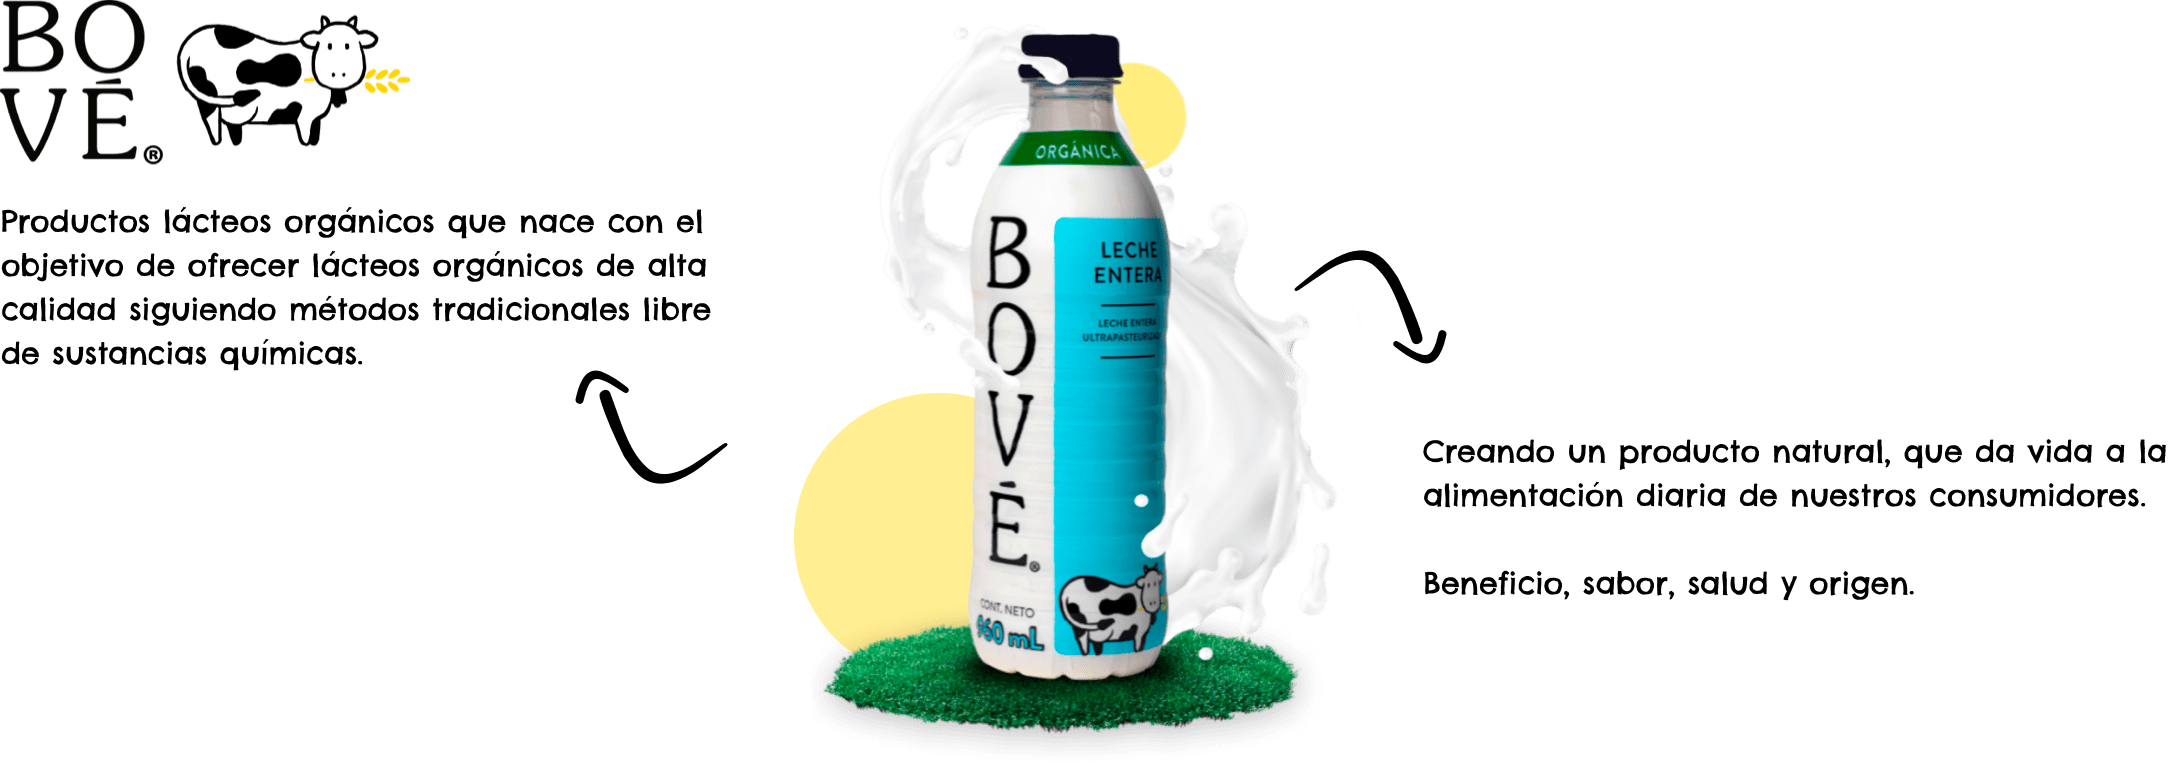 Bové productos lácteos orgánicos